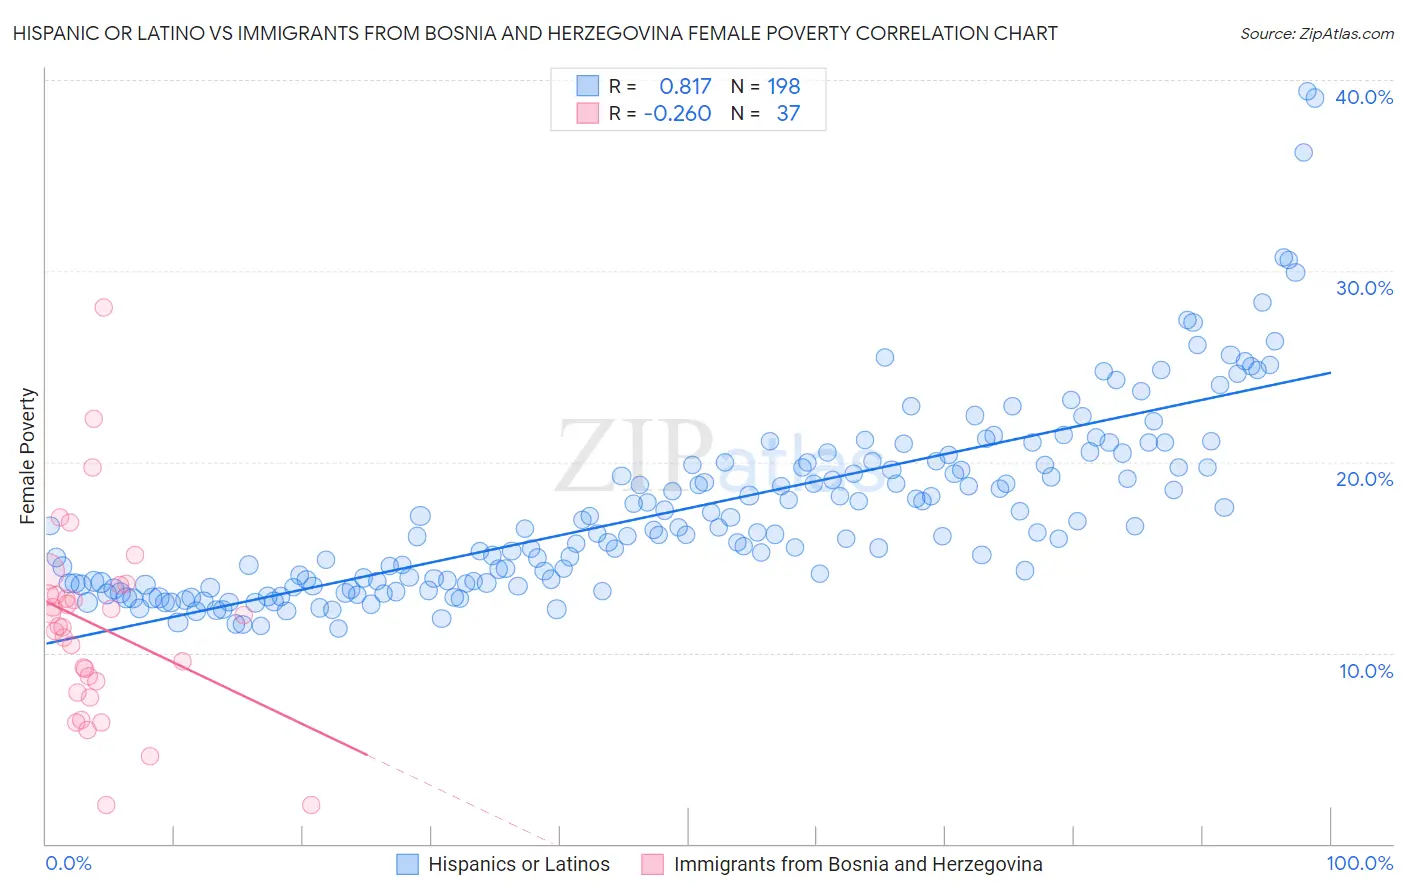 Hispanic or Latino vs Immigrants from Bosnia and Herzegovina Female Poverty